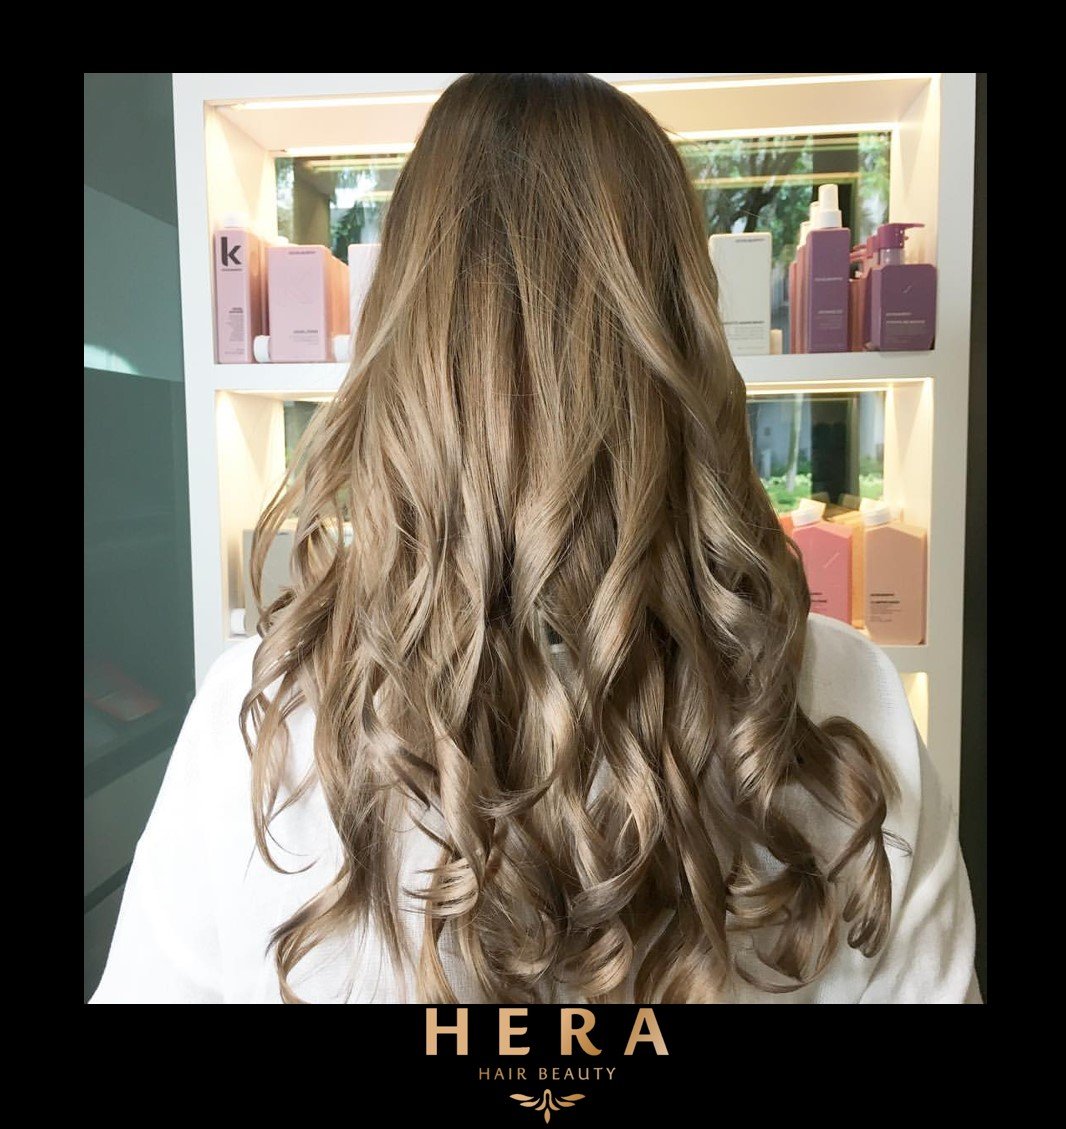 LONG CURLY HAIR CARE Tips and Advice   Hera Hair Beauty